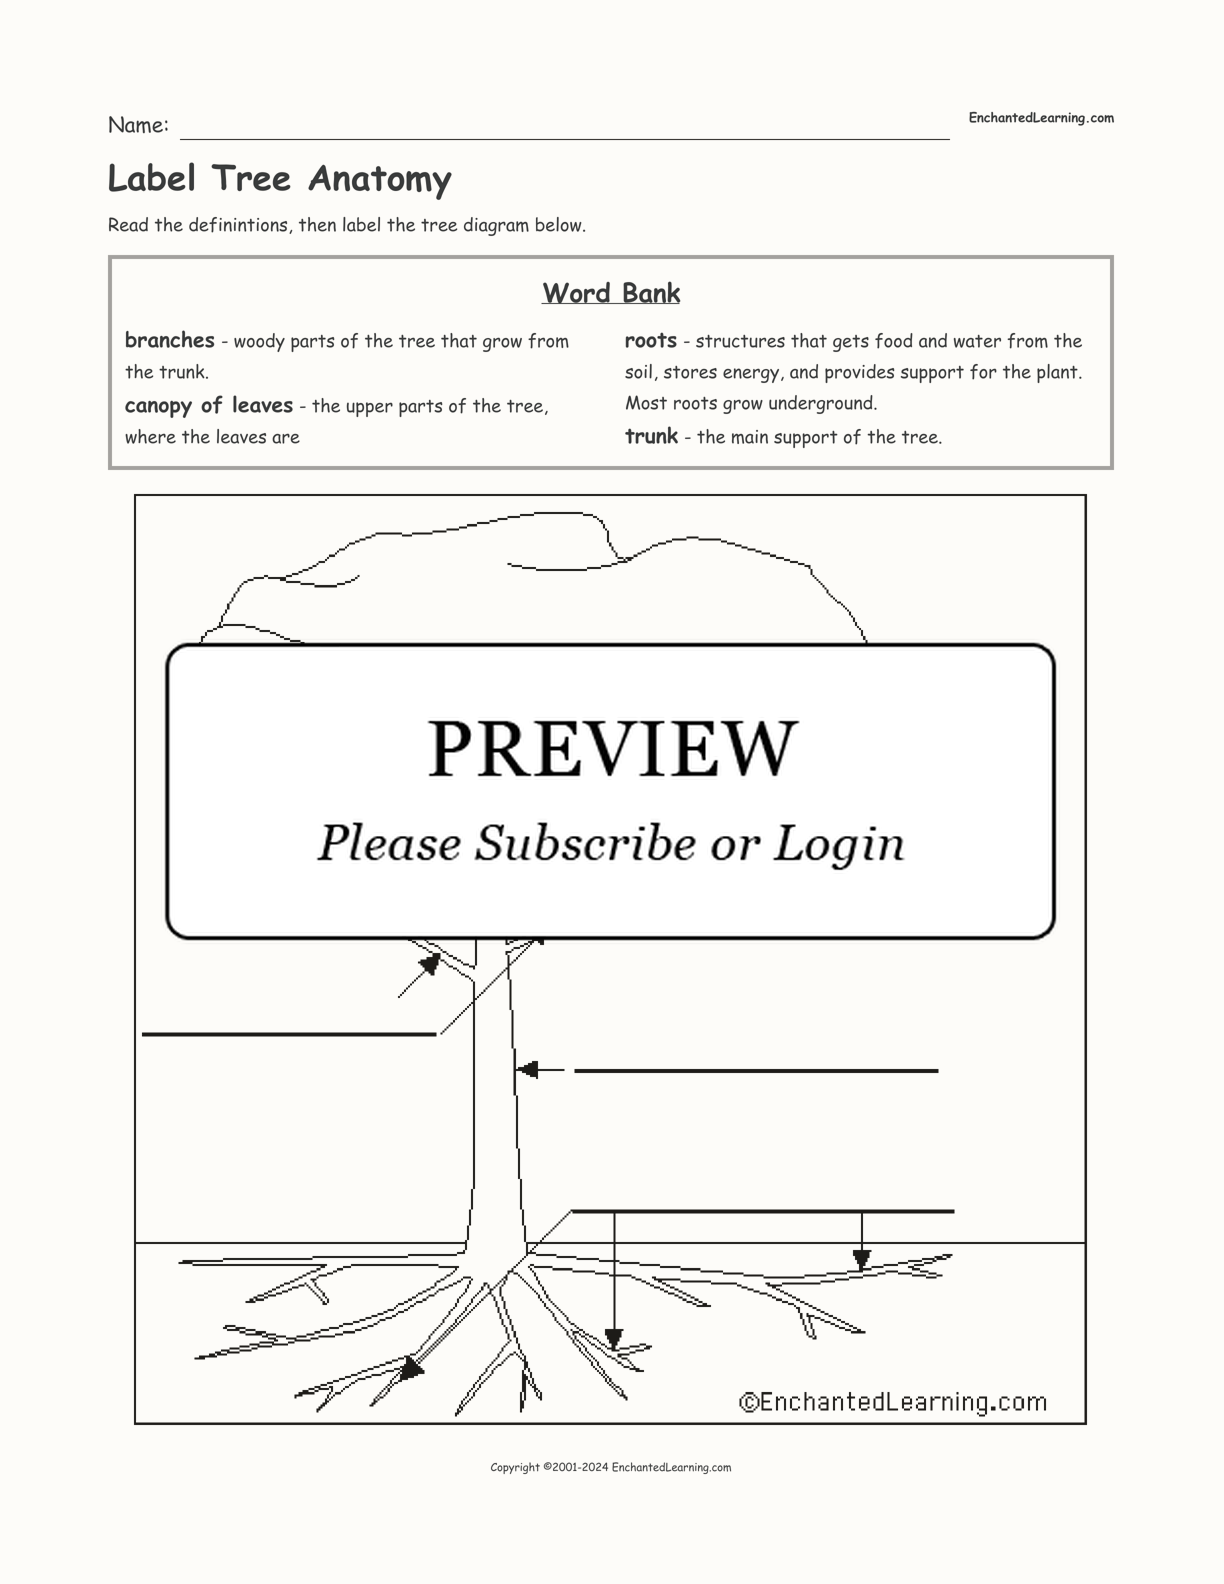 Label Tree Anatomy interactive worksheet page 1